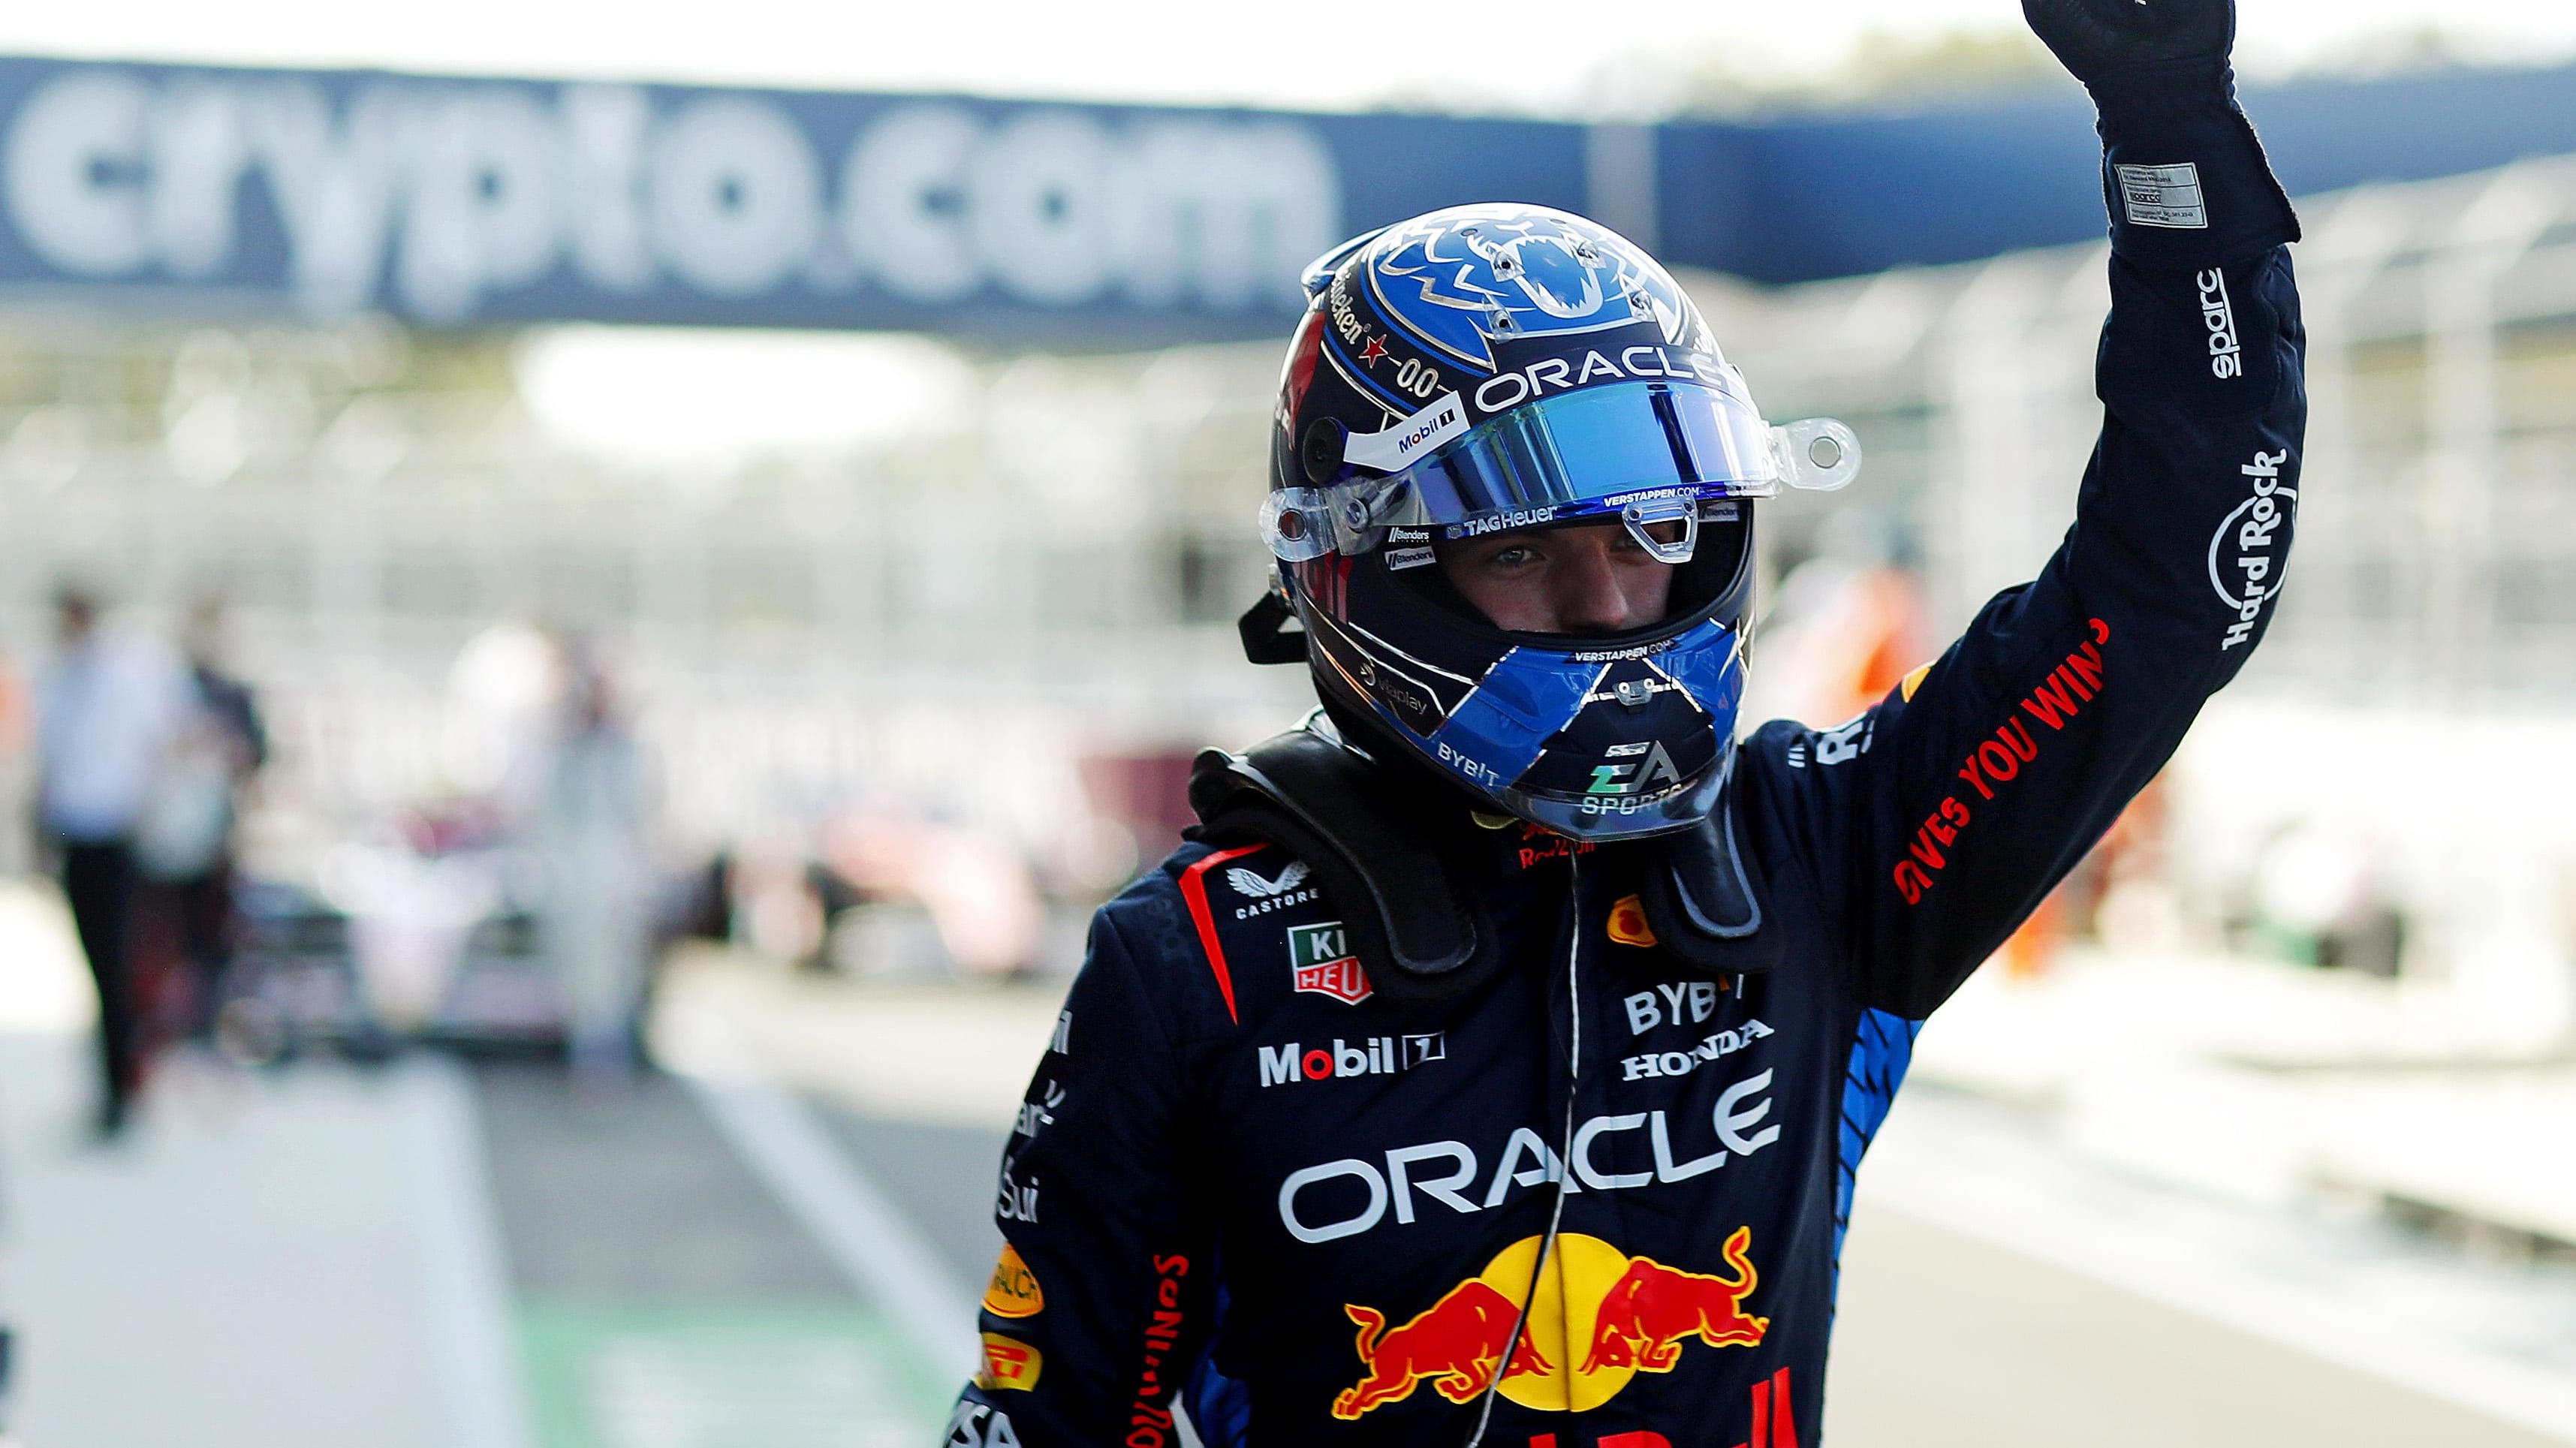 Miami F1 News: Max Verstappen on Pole Position